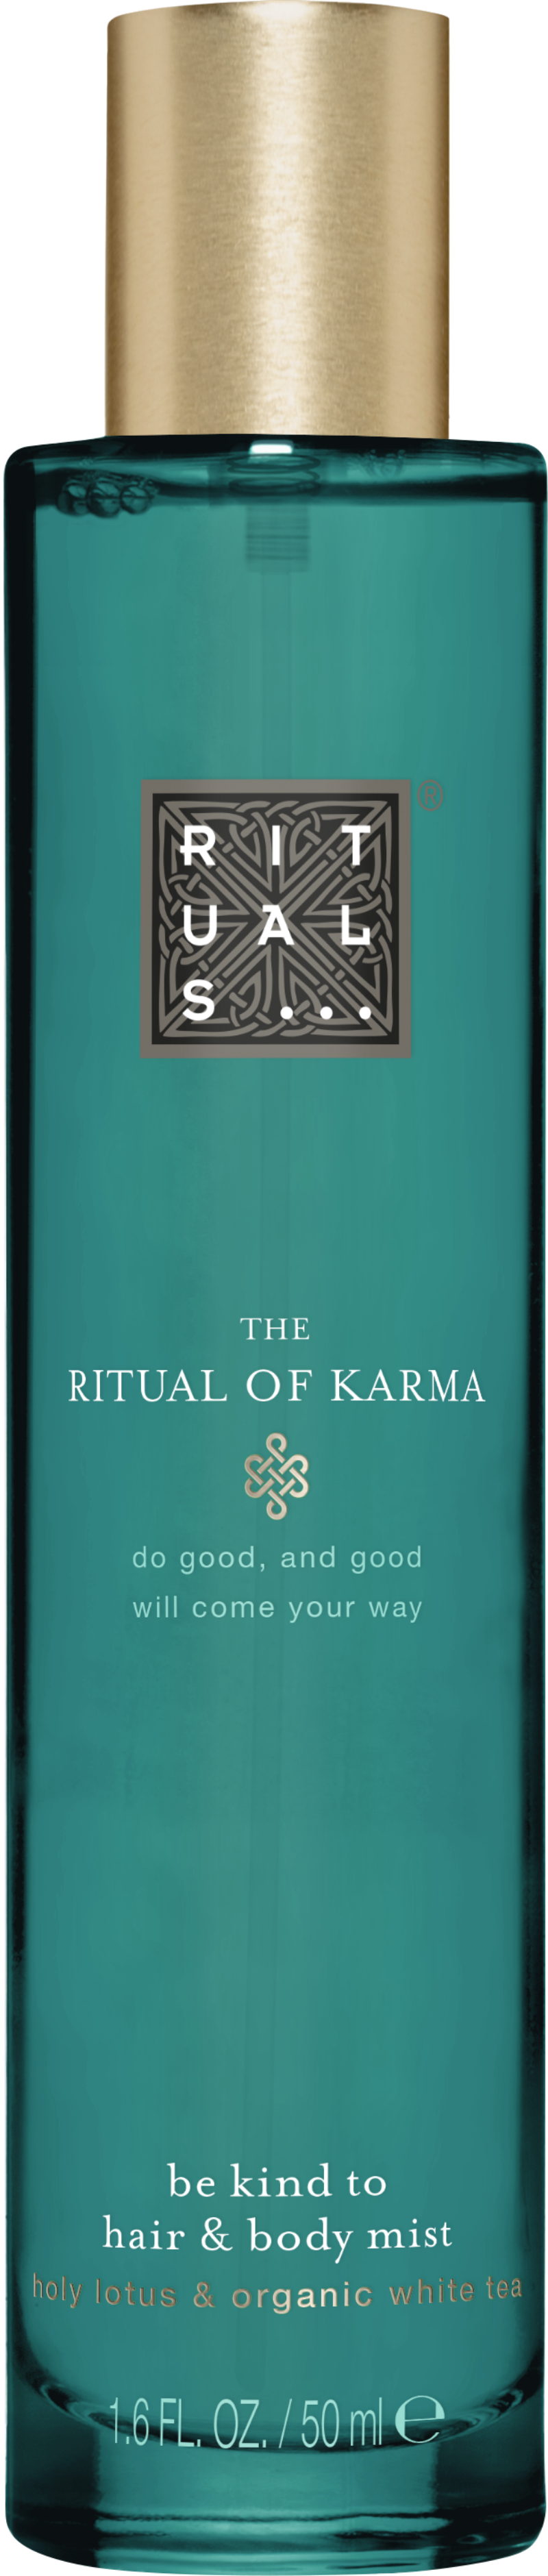 Rituals The Ritual of Karma Hair & Body Mist, 50ml